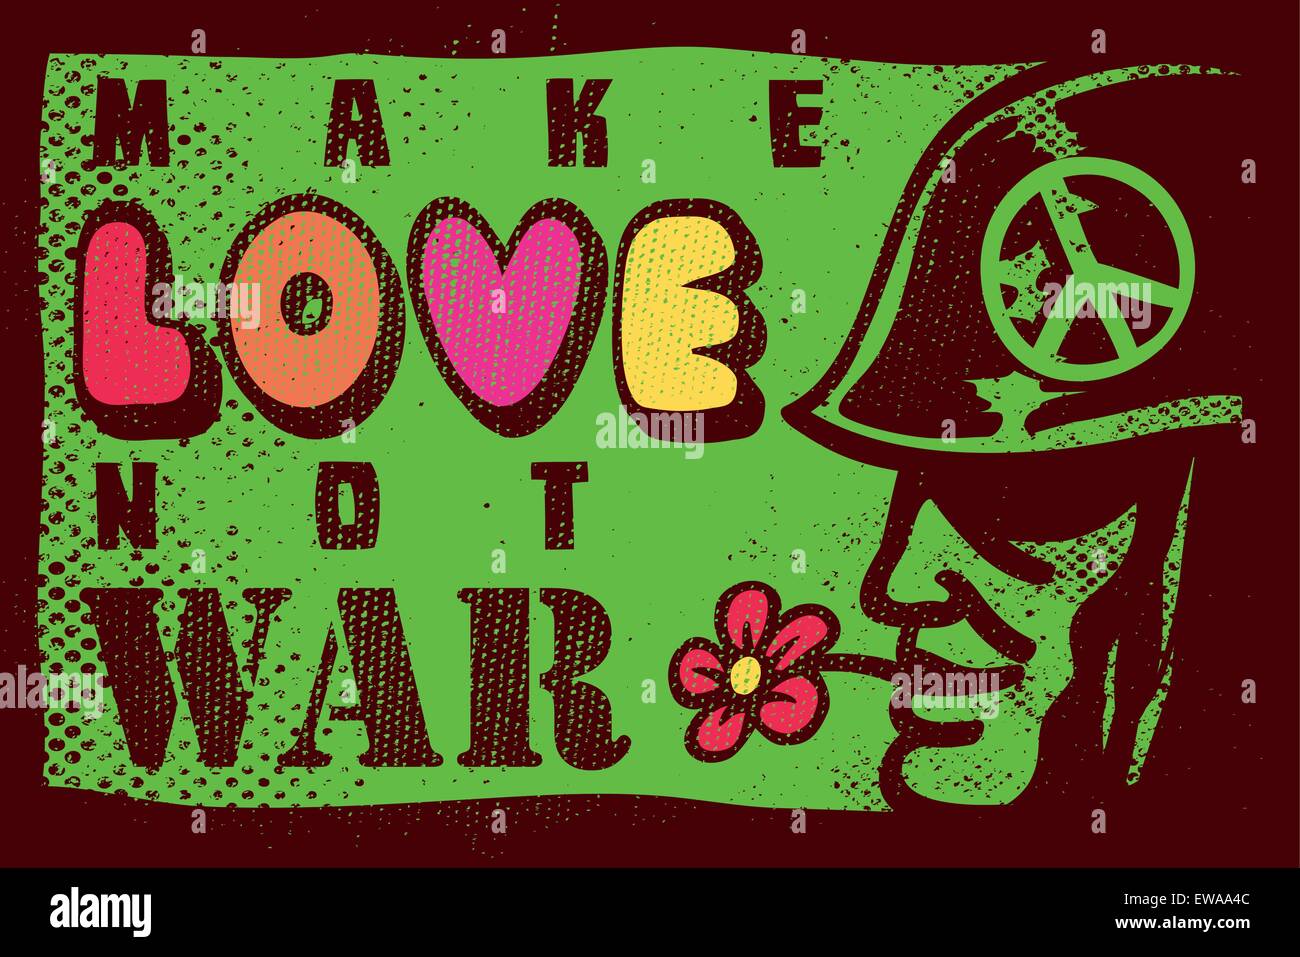 War not movement hippie love make Make Love